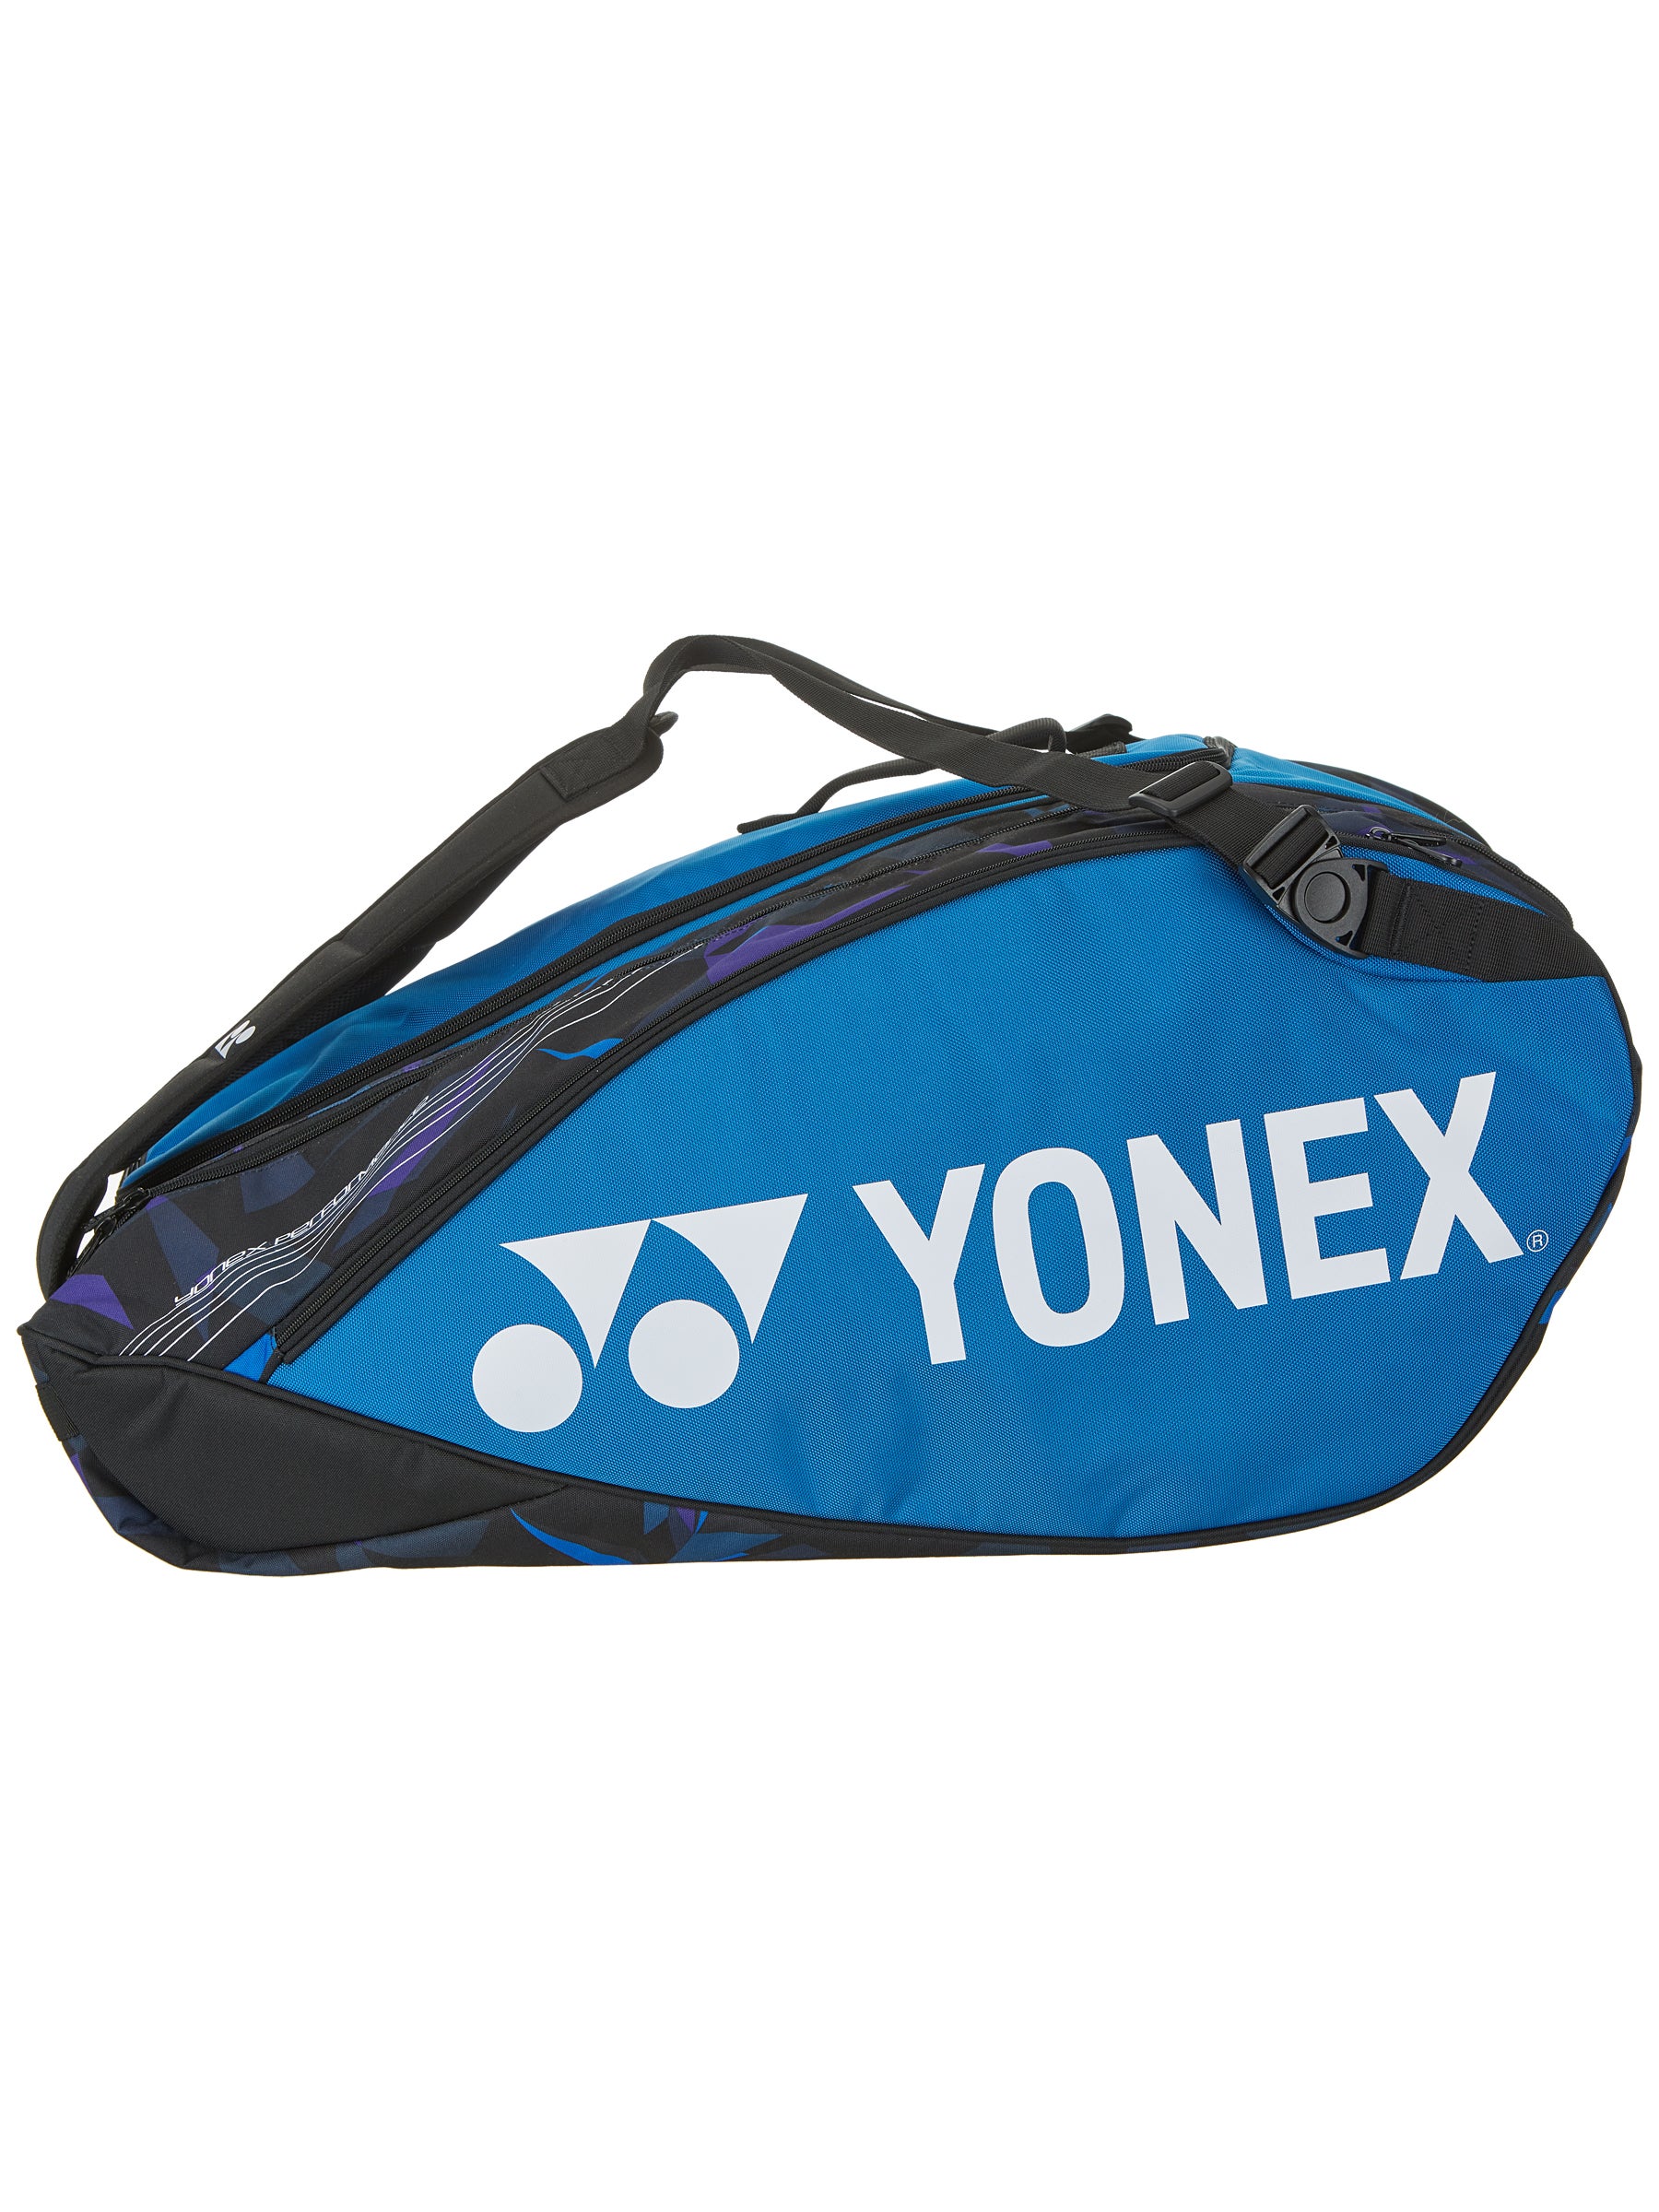 Badminton Pro Thermal Racquet Bag 98212EX YONEX 12 Tennis/15 Infinite BLUE 